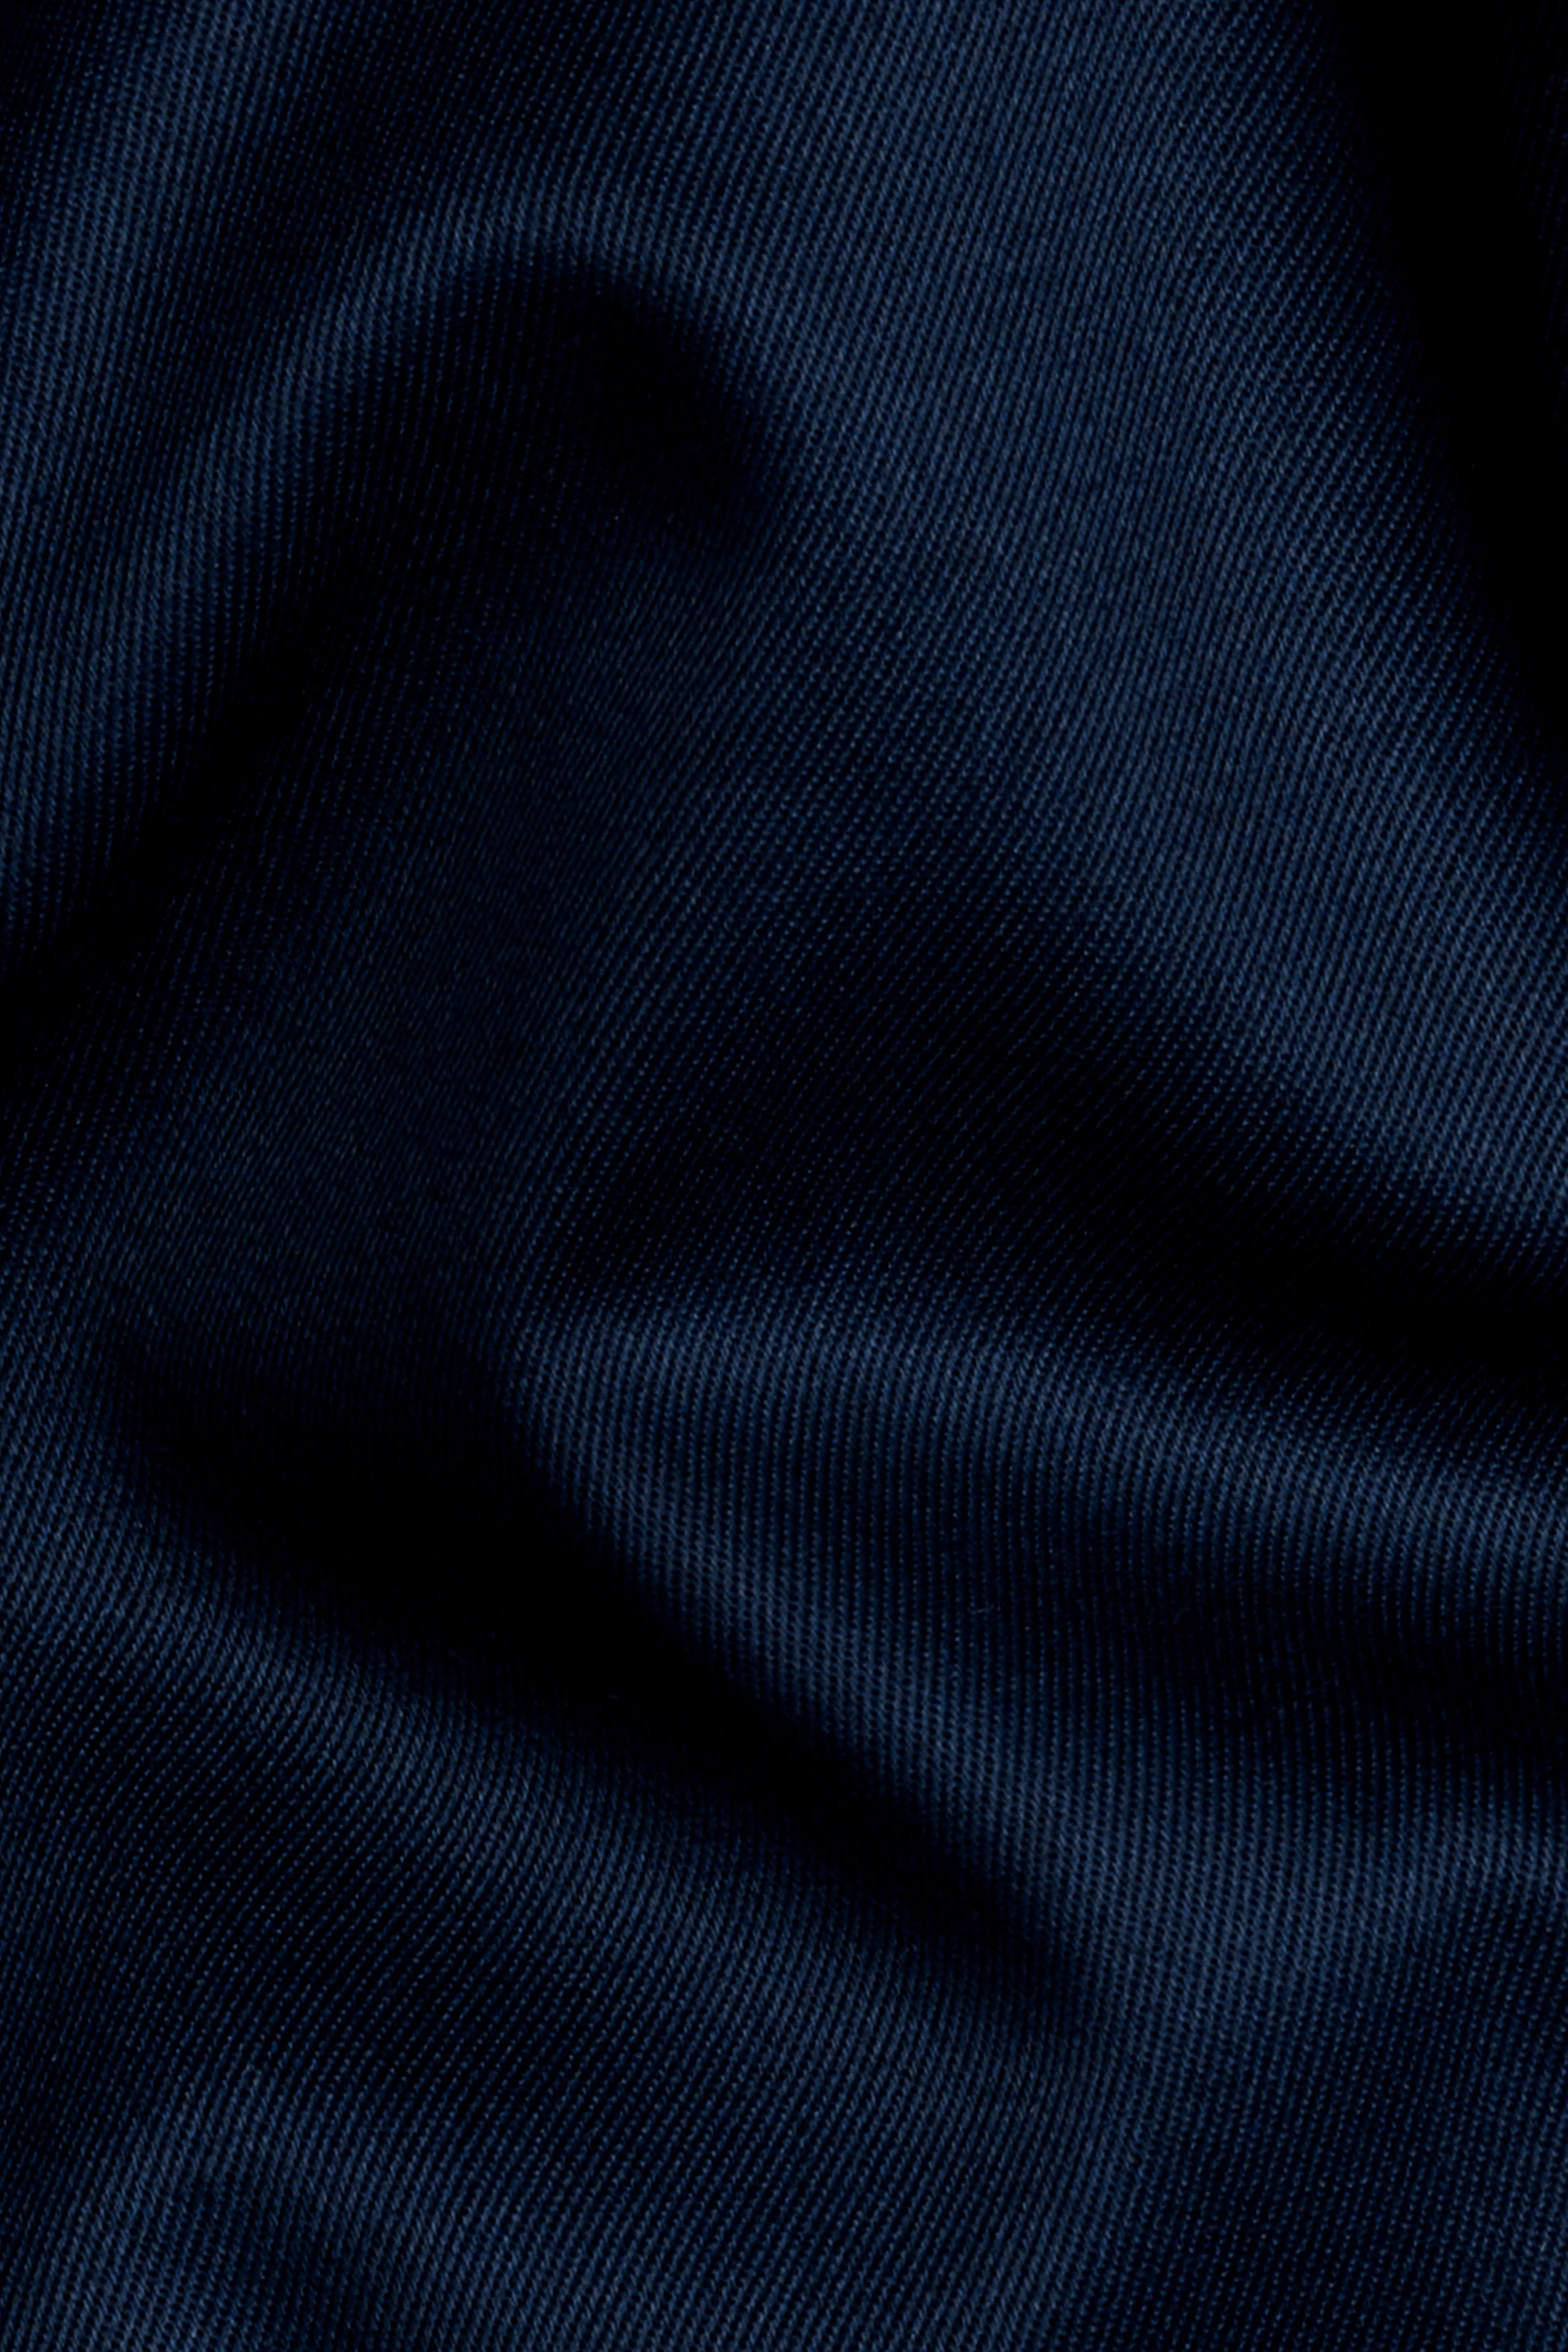 Delft Blue Premium Cotton Bandhgala Designer Suit ST2803-D82-36,ST2803-D82-38,ST2803-D82-40,ST2803-D82-42,ST2803-D82-44,ST2803-D82-46,ST2803-D82-48,ST2803-D82-50,ST2803-D82-52,ST2803-D82-54,ST2803-D82-56,ST2803-D82-58,ST2803-D82-60